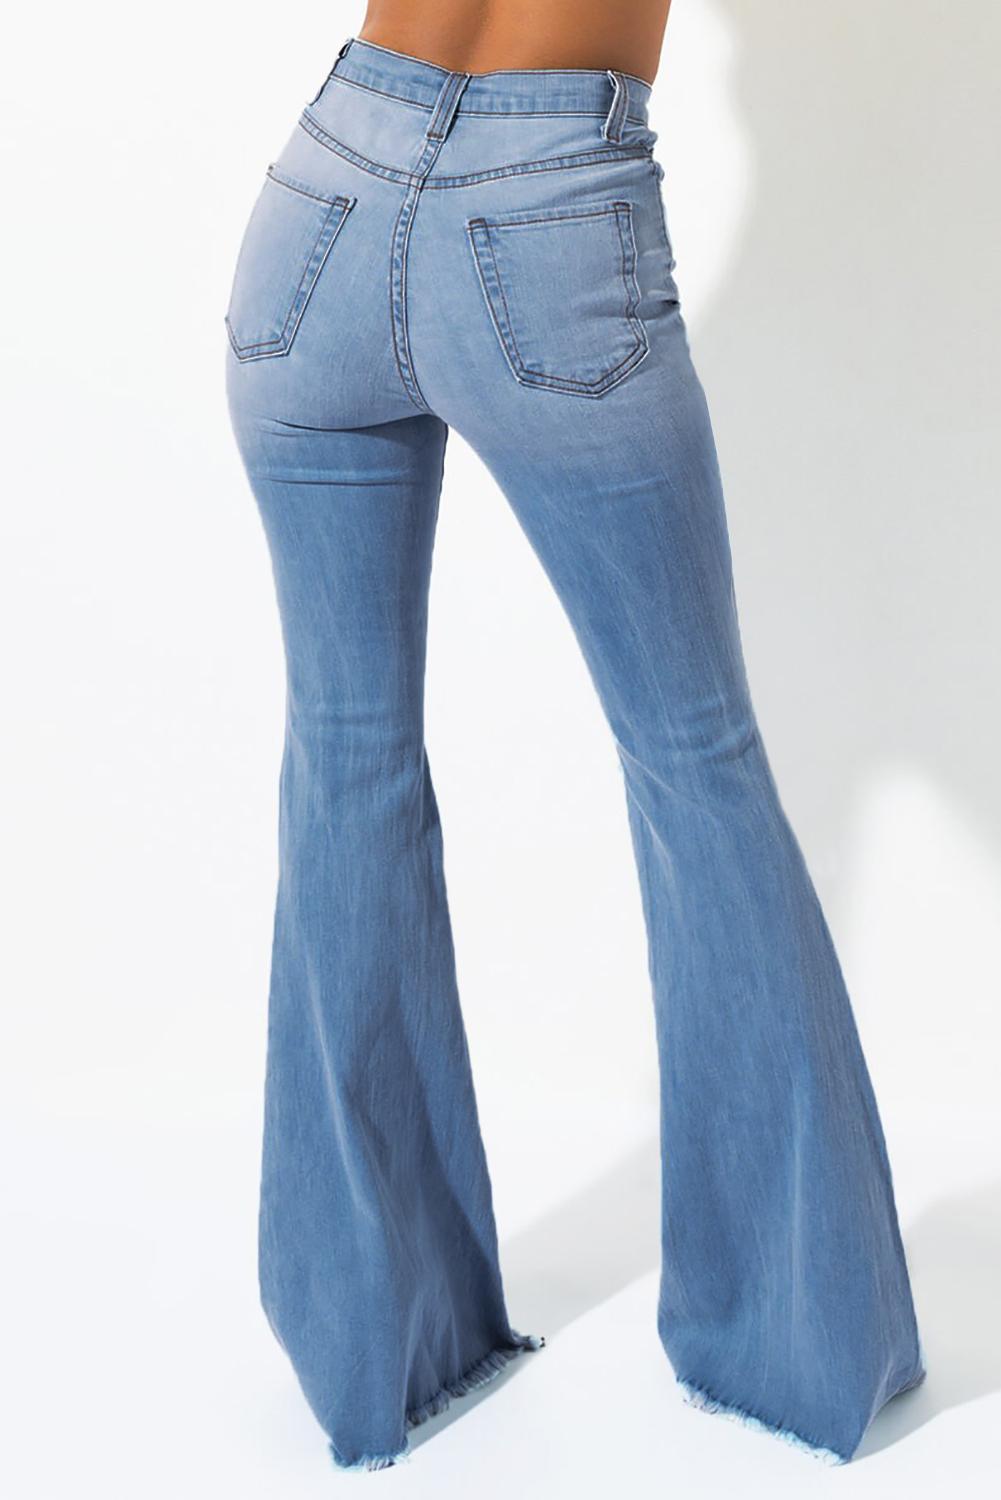 Stylish Sky Blue High Waisted Distressed Flare Jeans